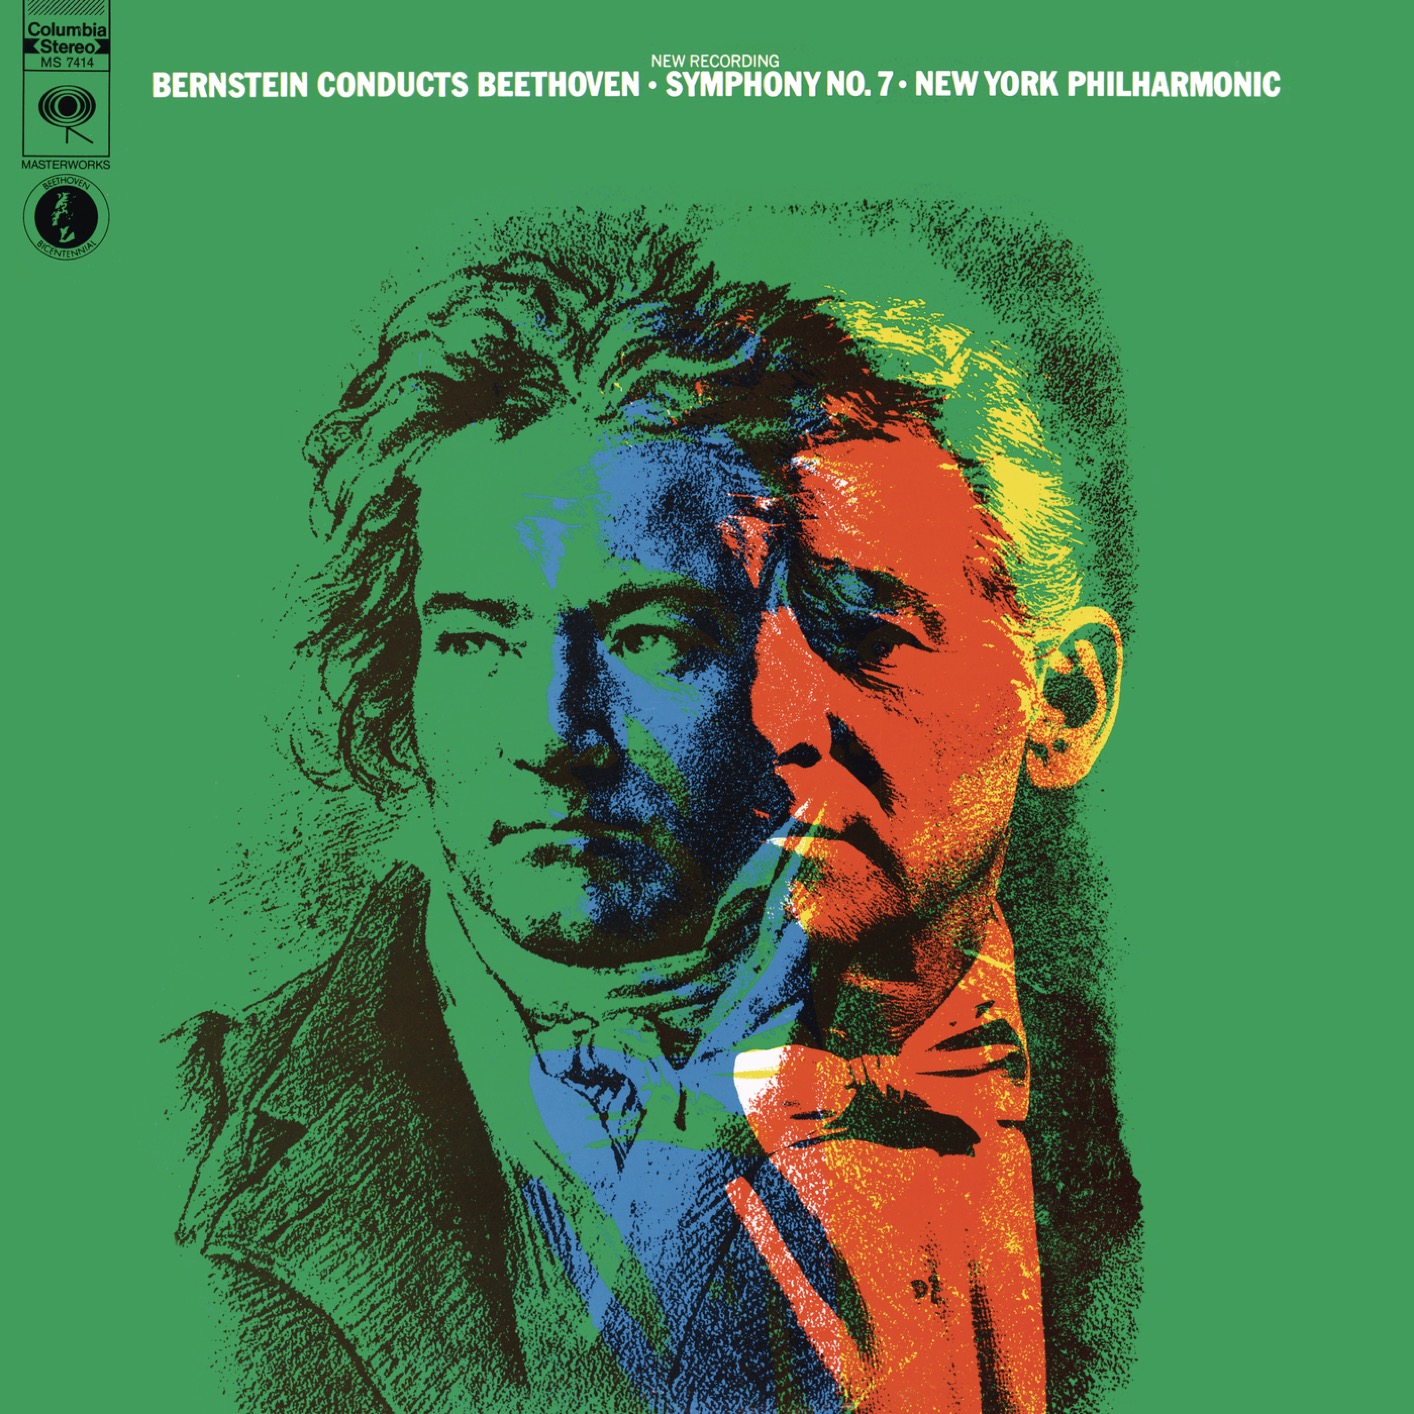 Leonard Bernstein - Beethoven: Symphony No. 7 in A Major, Op. 92 (Remastered) (2019) [FLAC 24bit/192kHz]